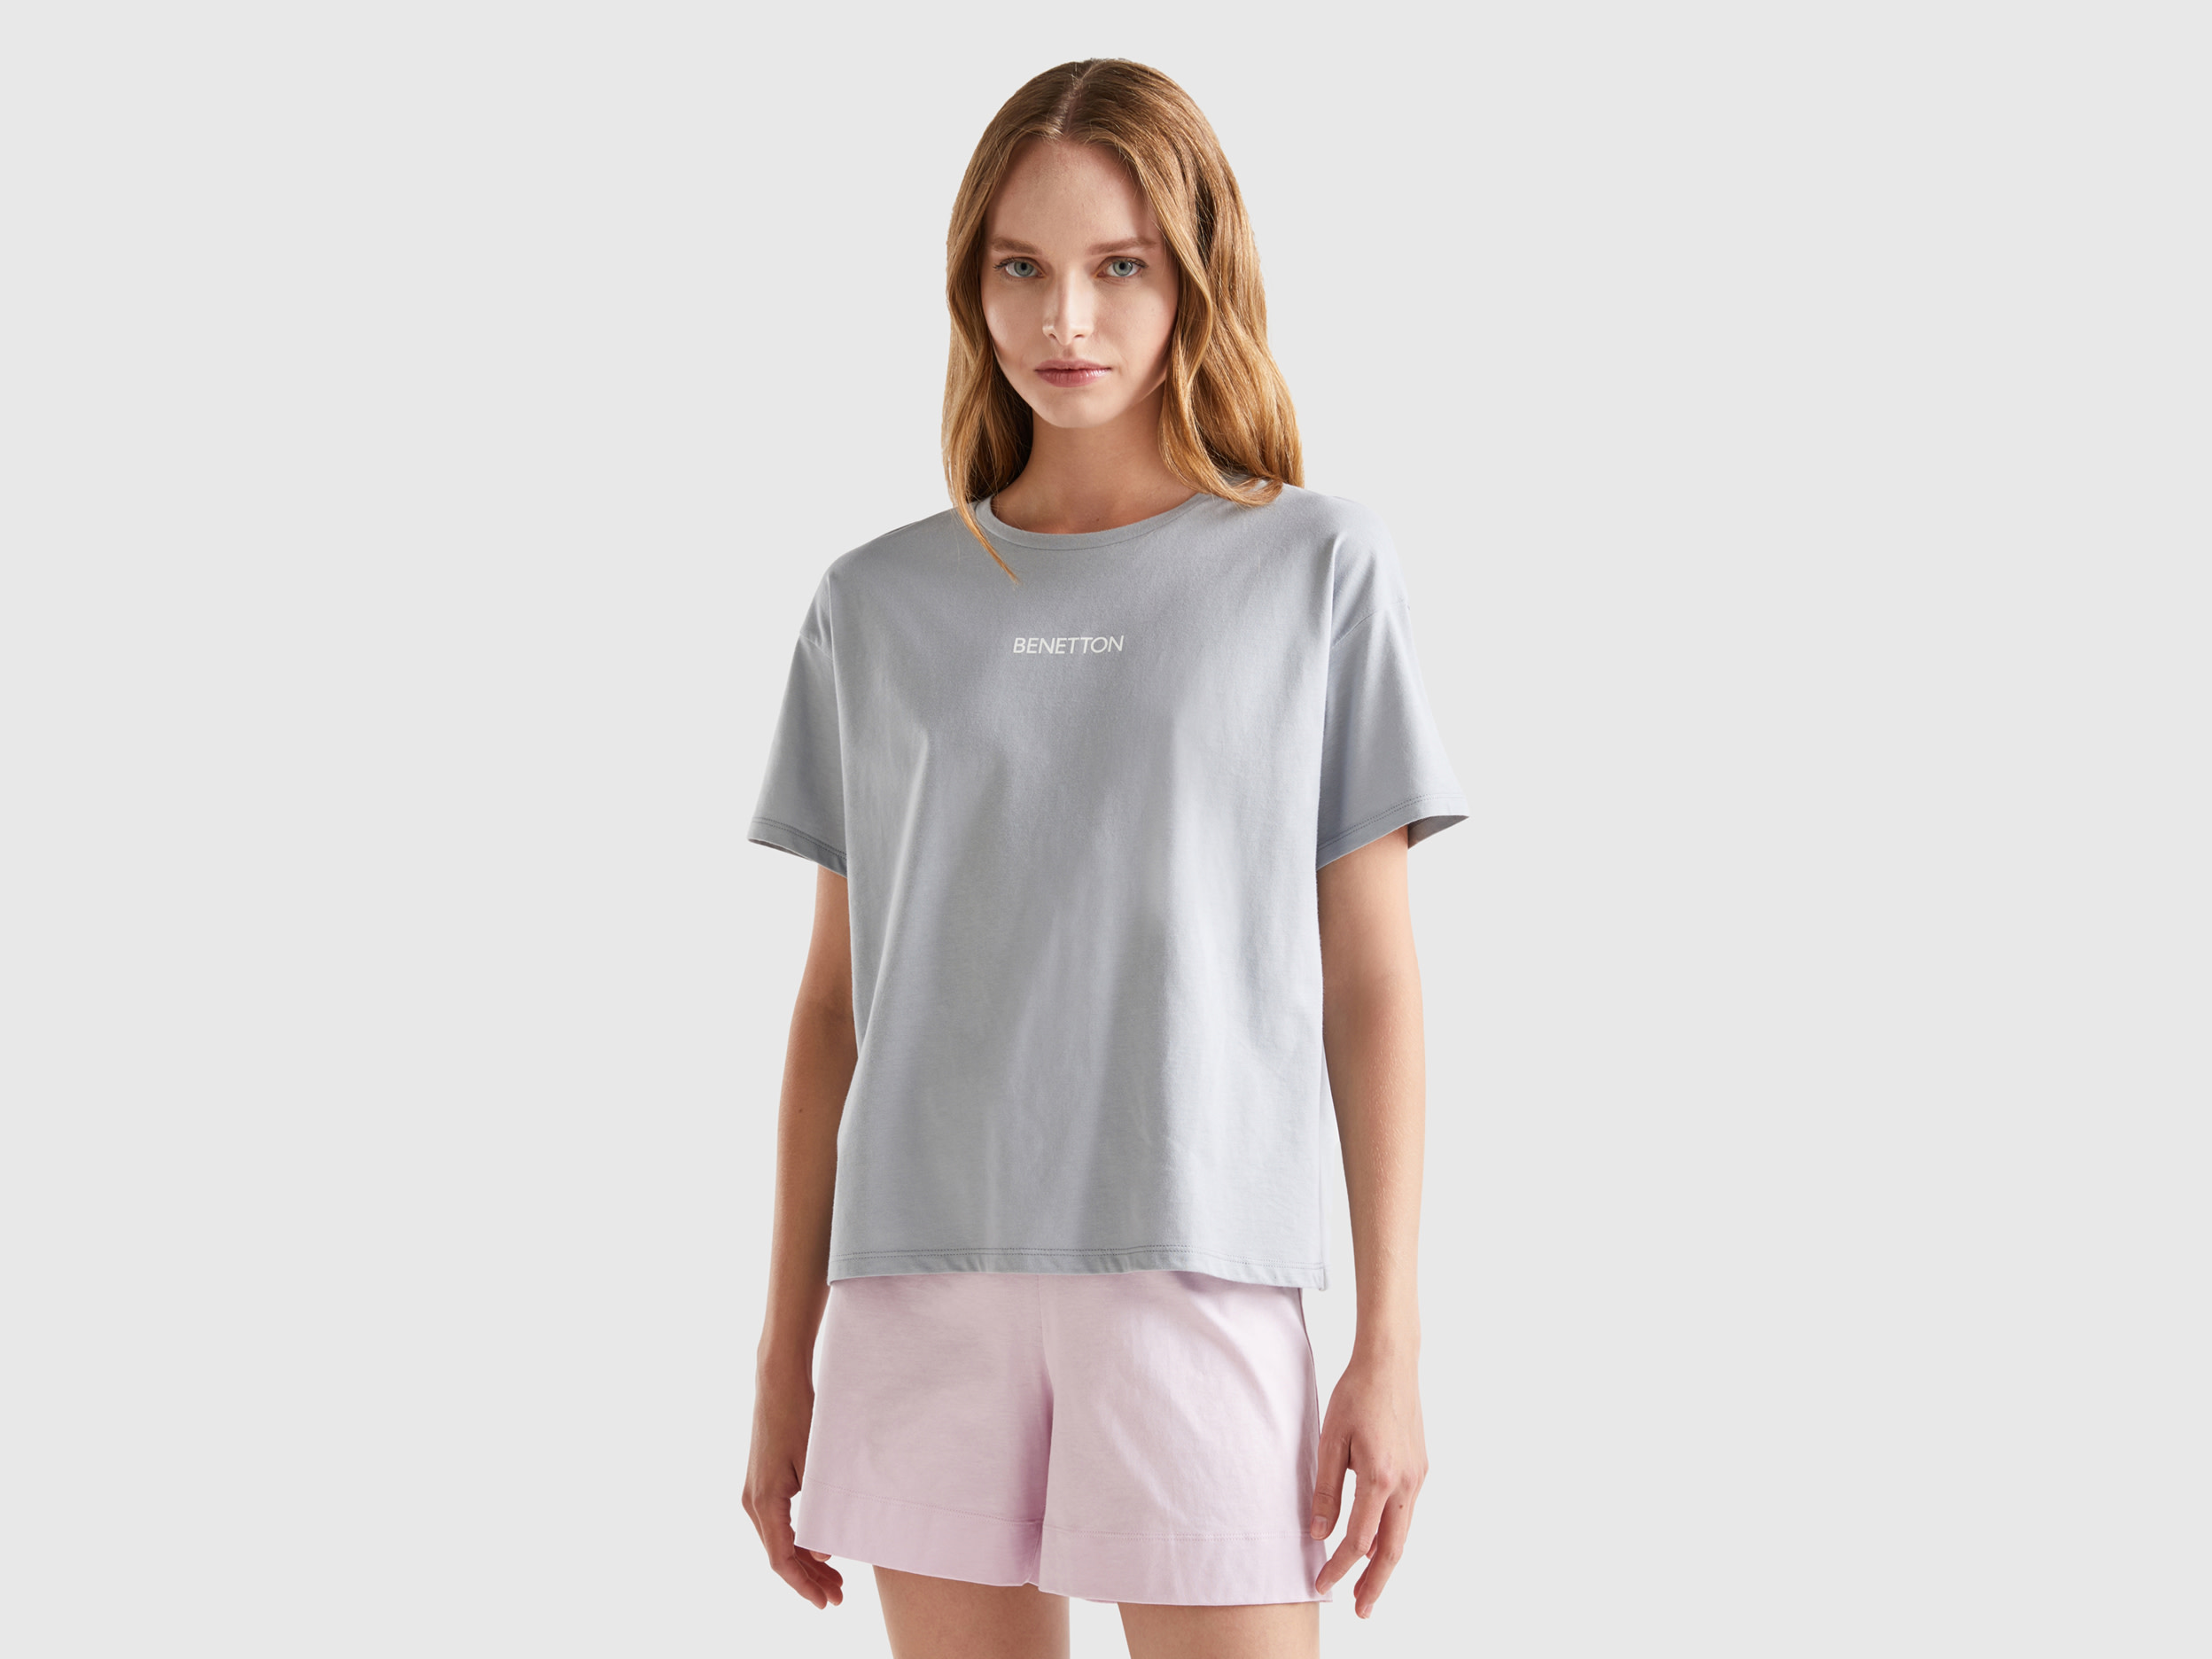 Benetton, 100% Cotton T-shirt, size L, Light Gray, Women